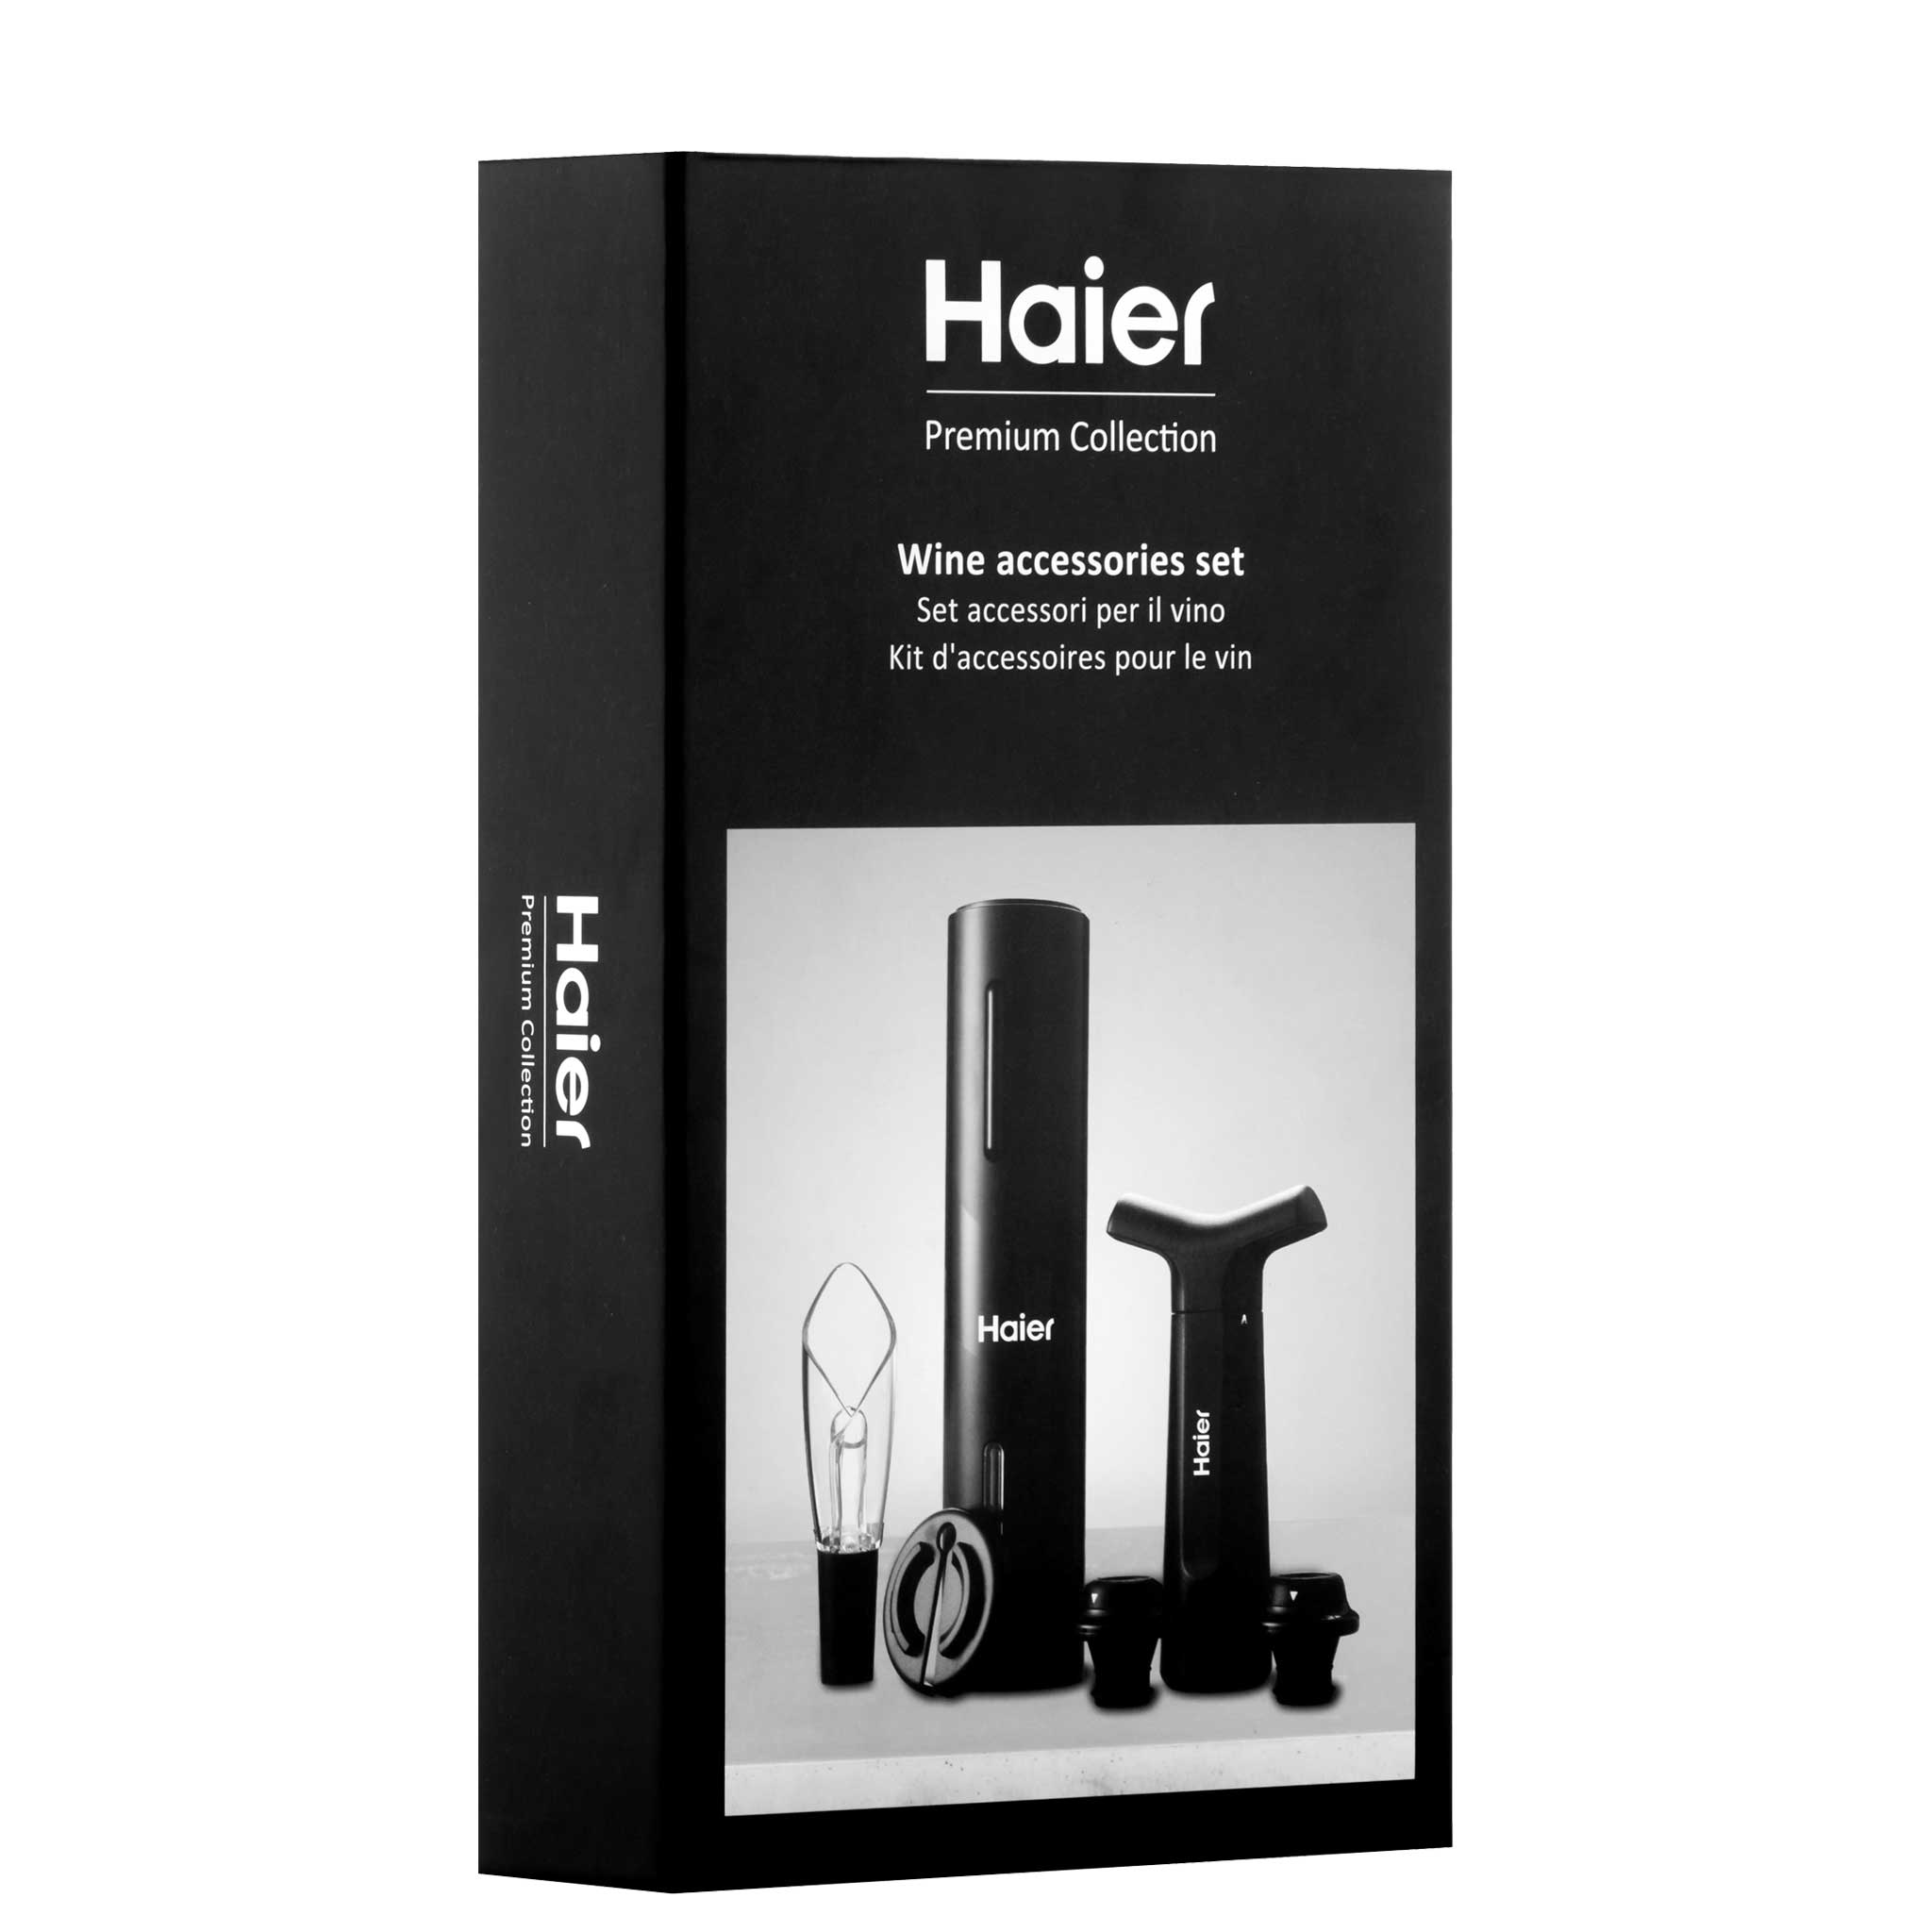 Haier 6-in-1 Rechargeable Electric Wine Bottle Opener Kit